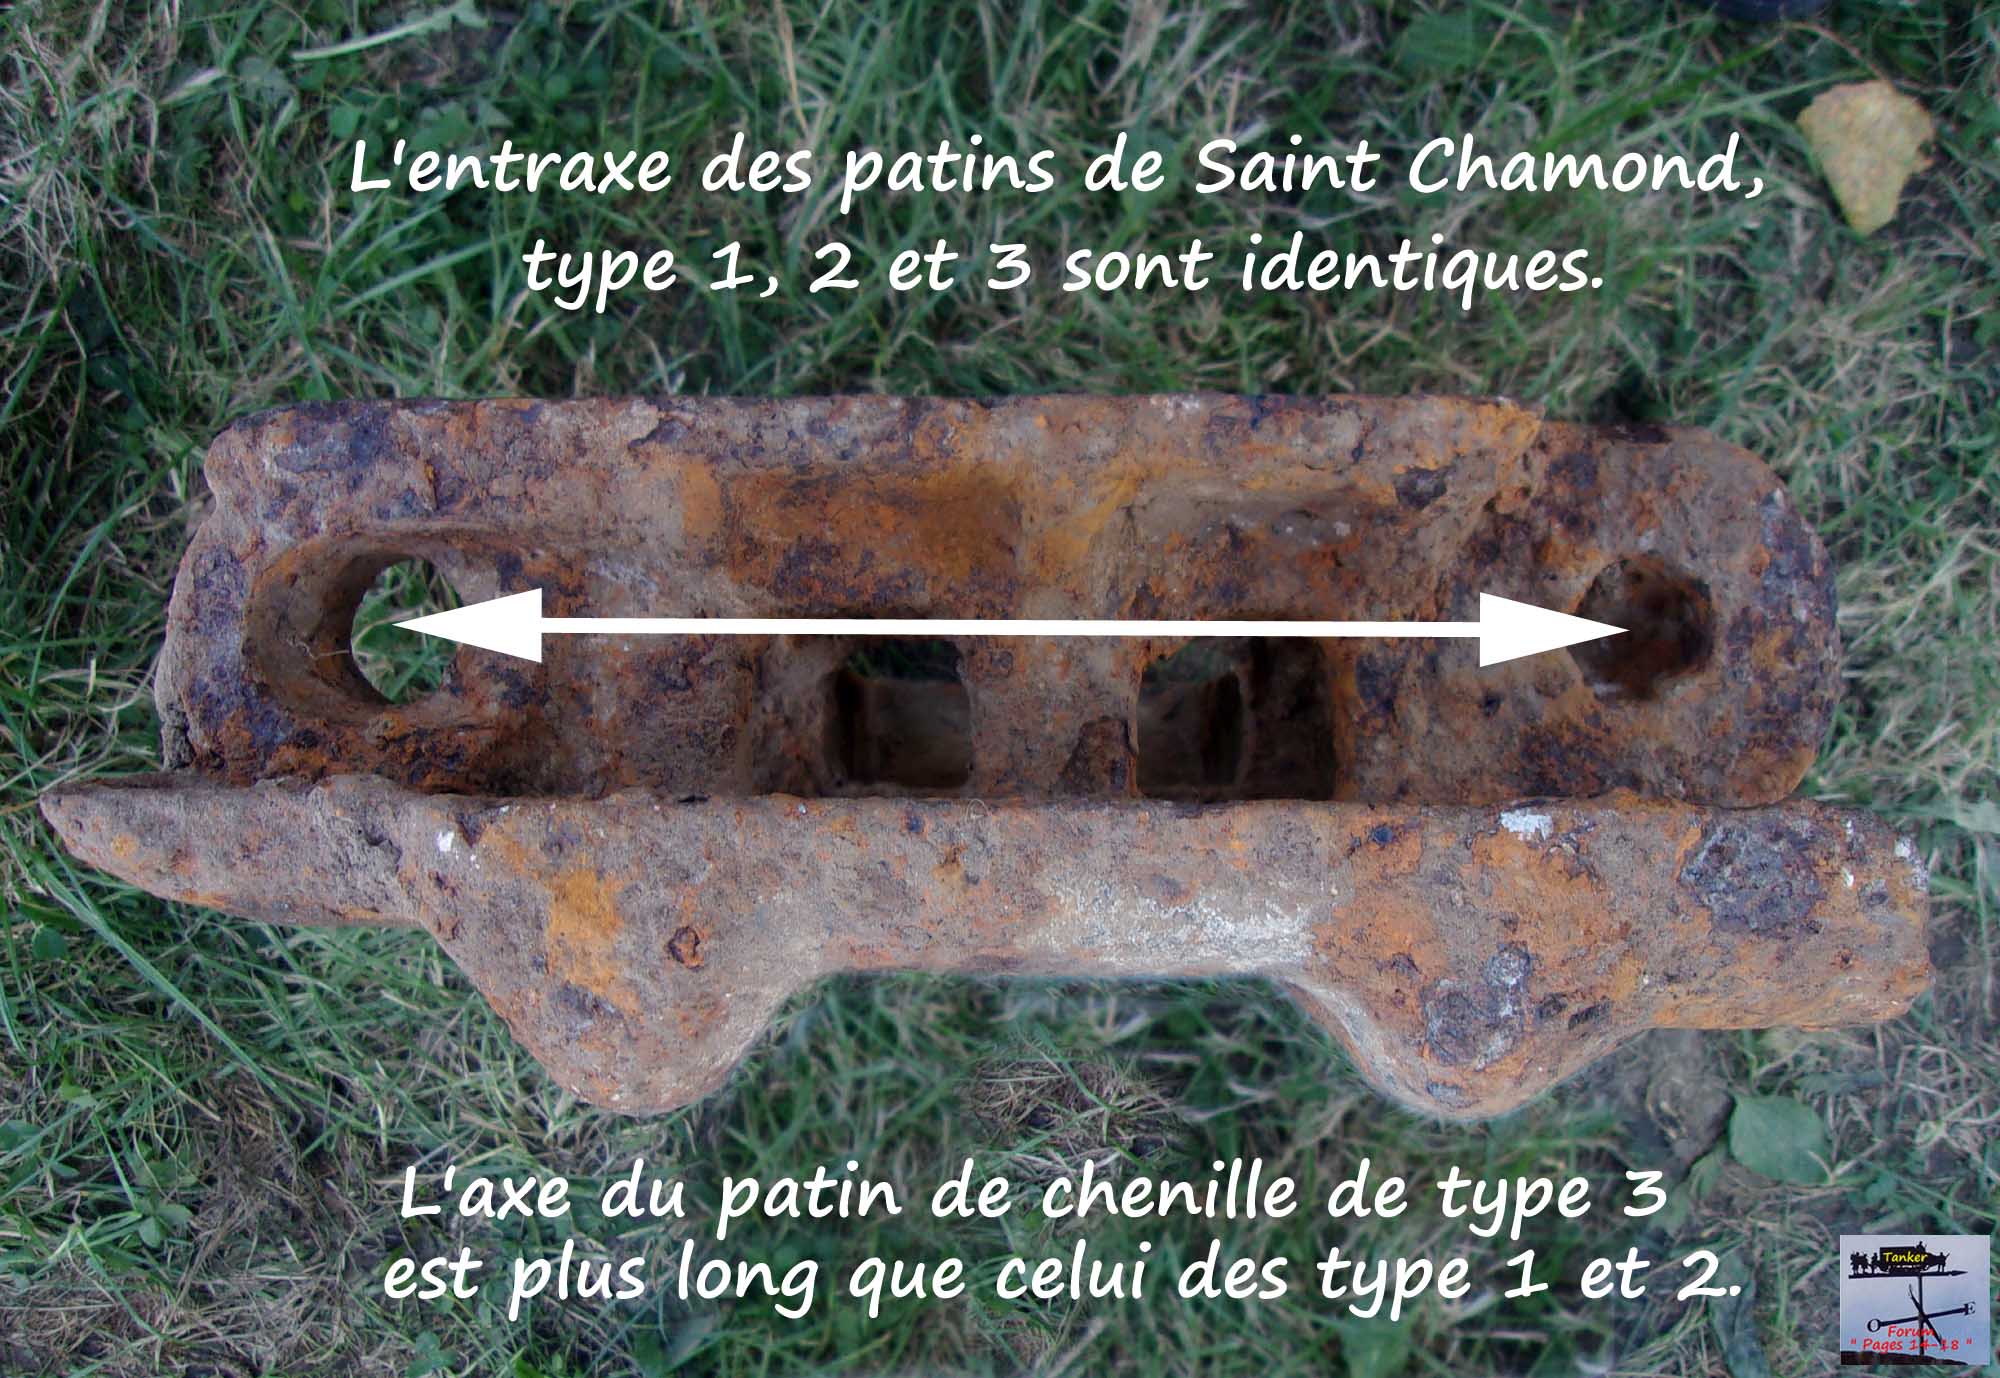 609 - St Chamond - Patins type 1 et 2 (01a).jpg